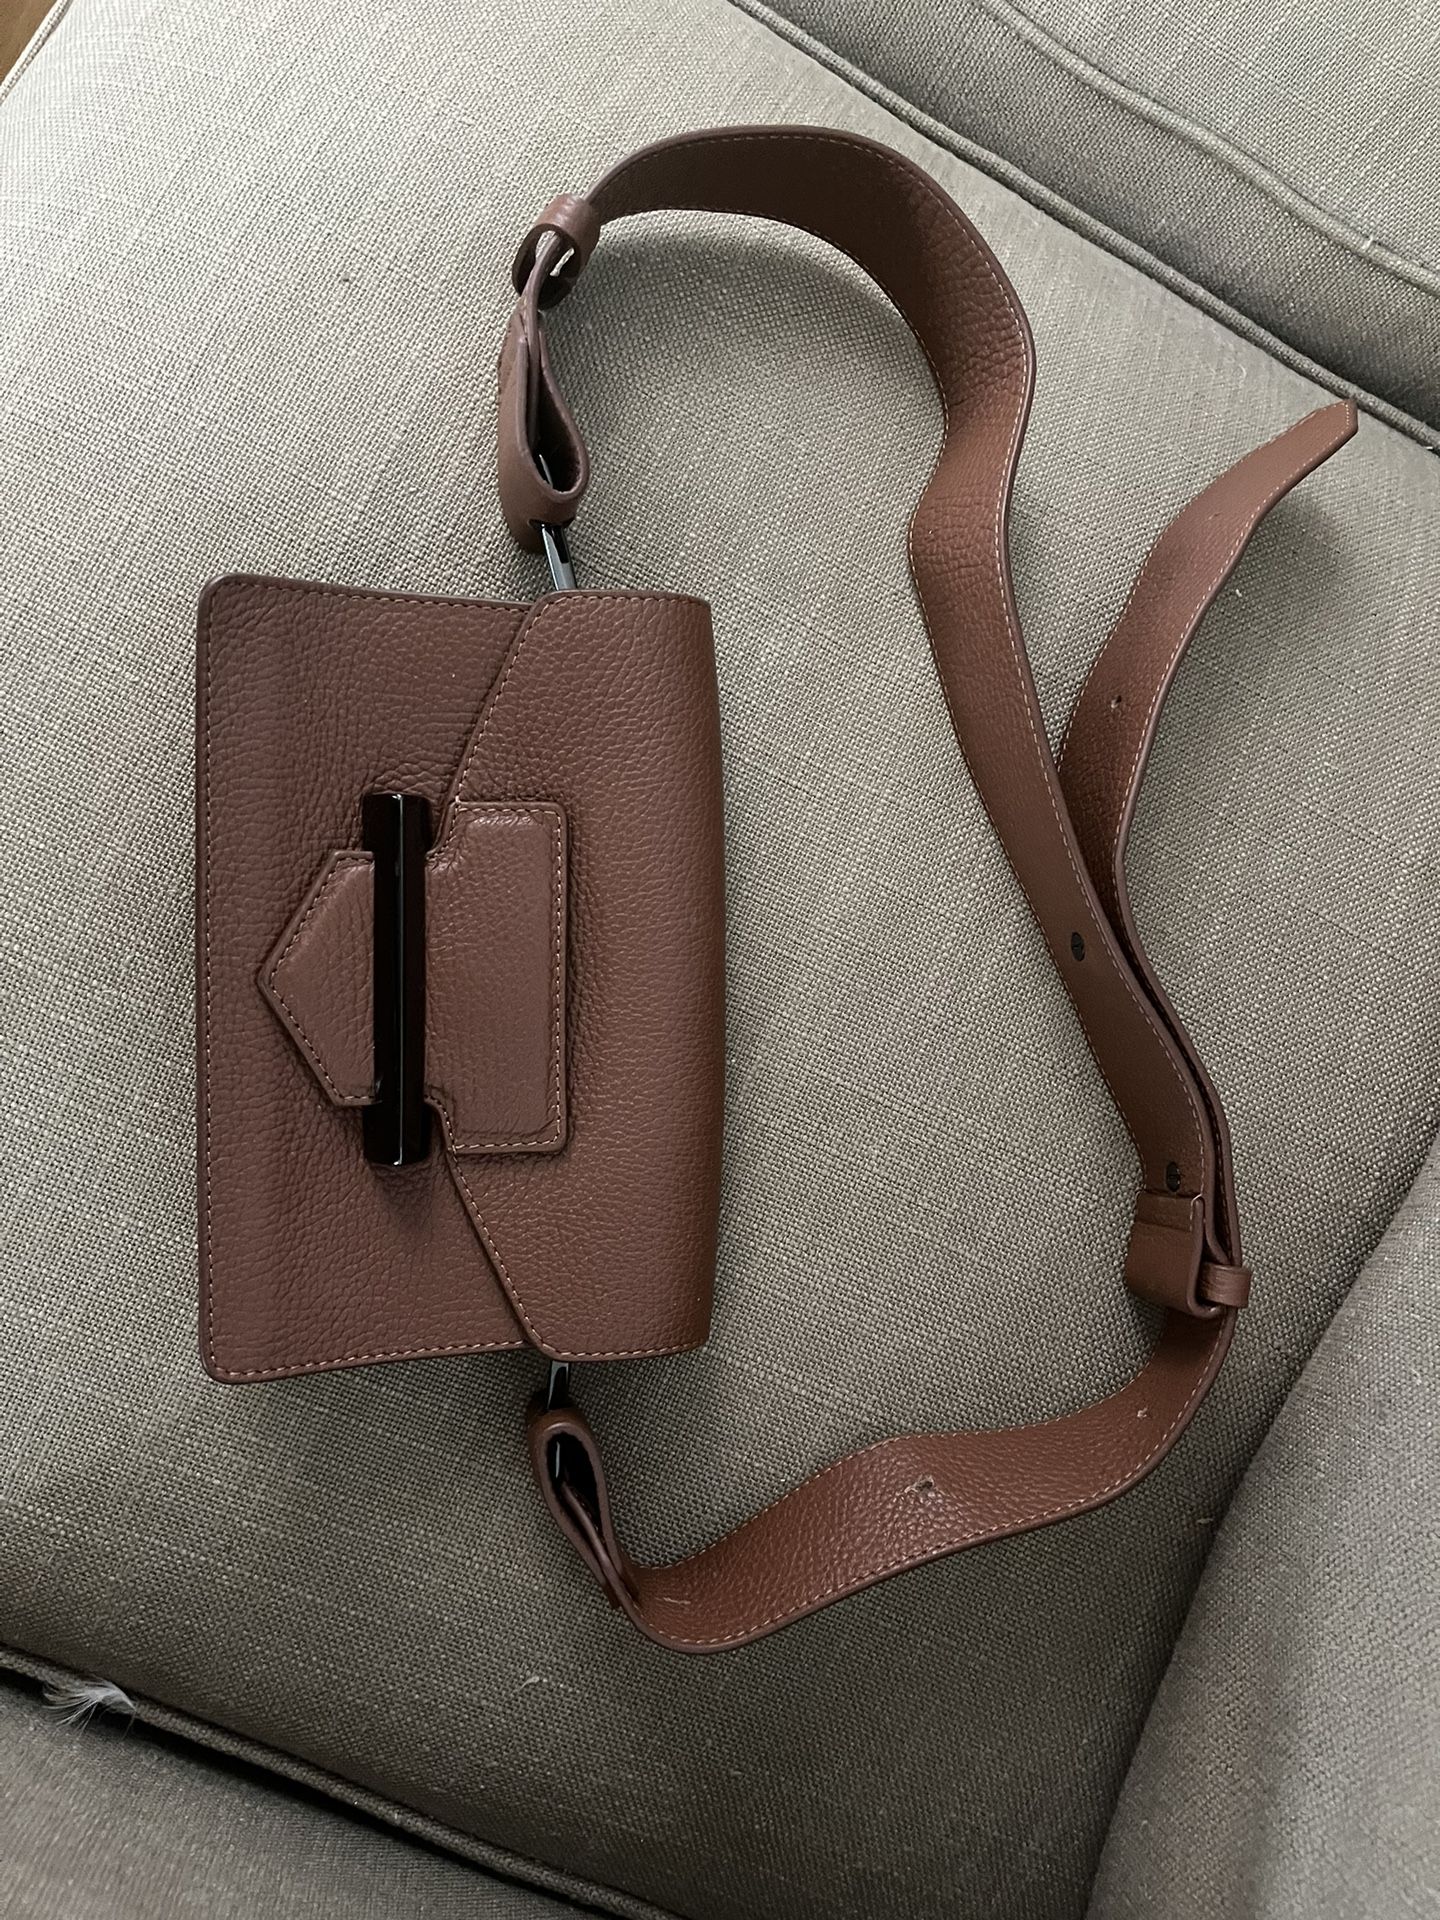 Aquatalia Brown Leather Waist Bag